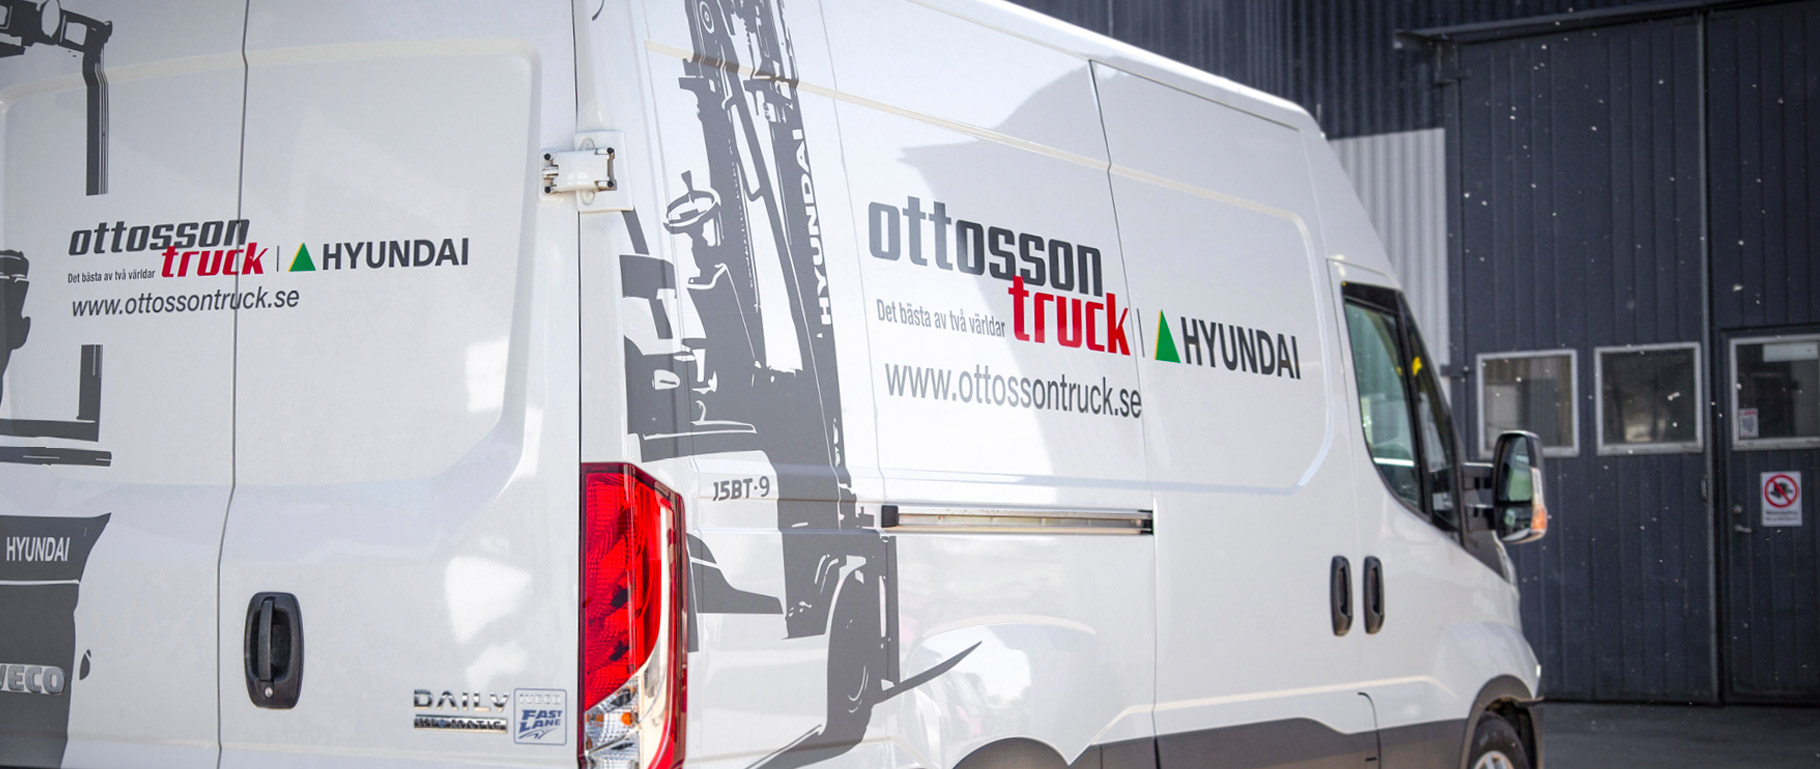 Ottosson Truck - Truckservice